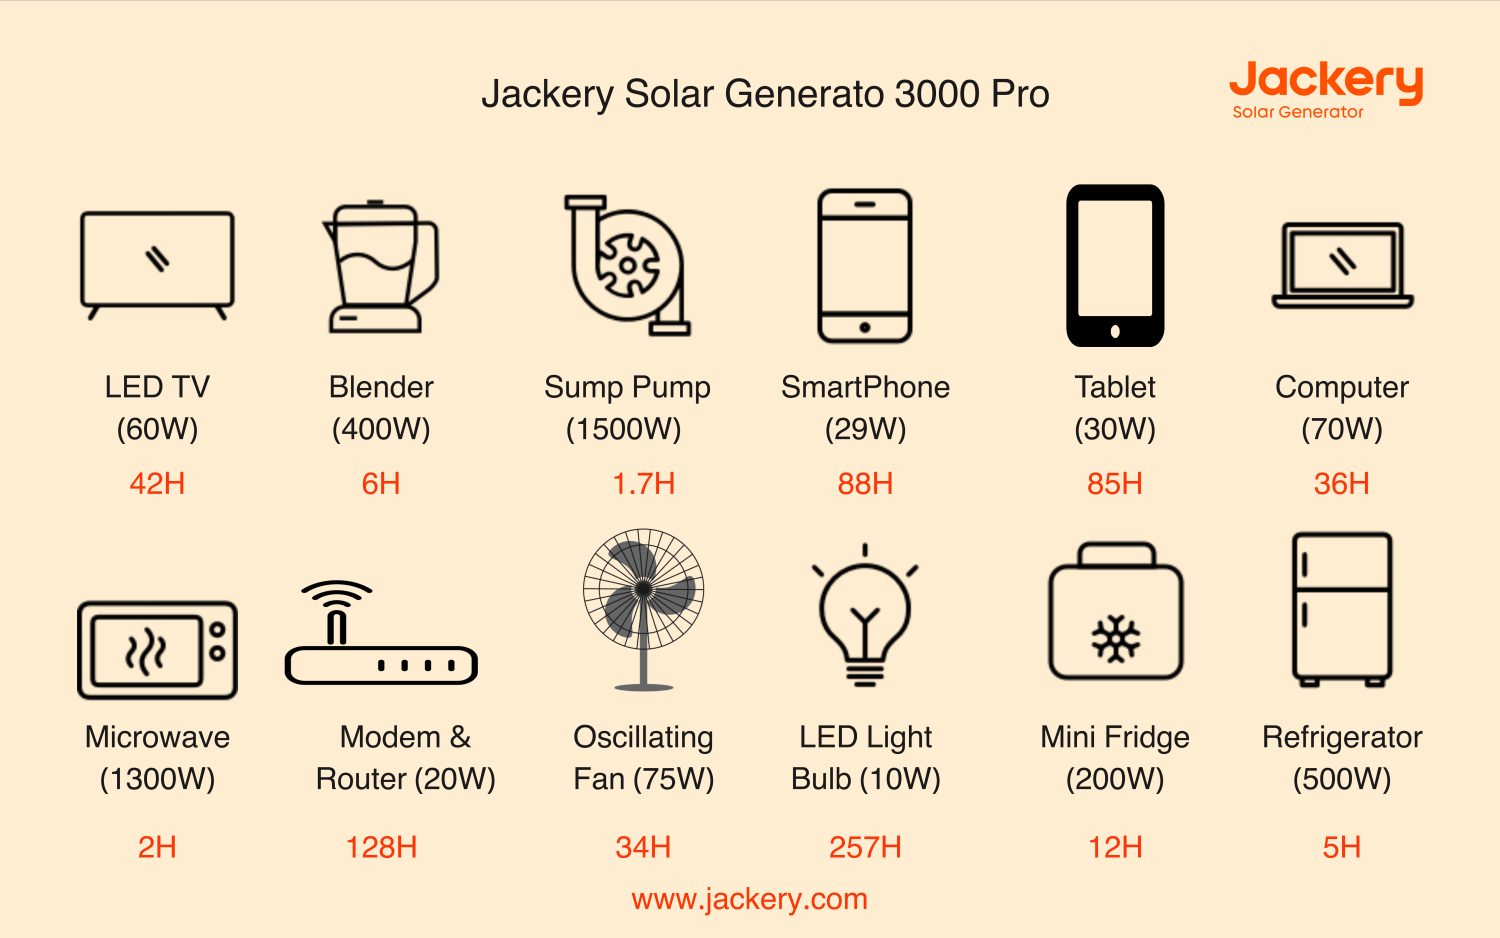 Best Solar Battery Backup For Most Use-jackery solar generator 3000 pro